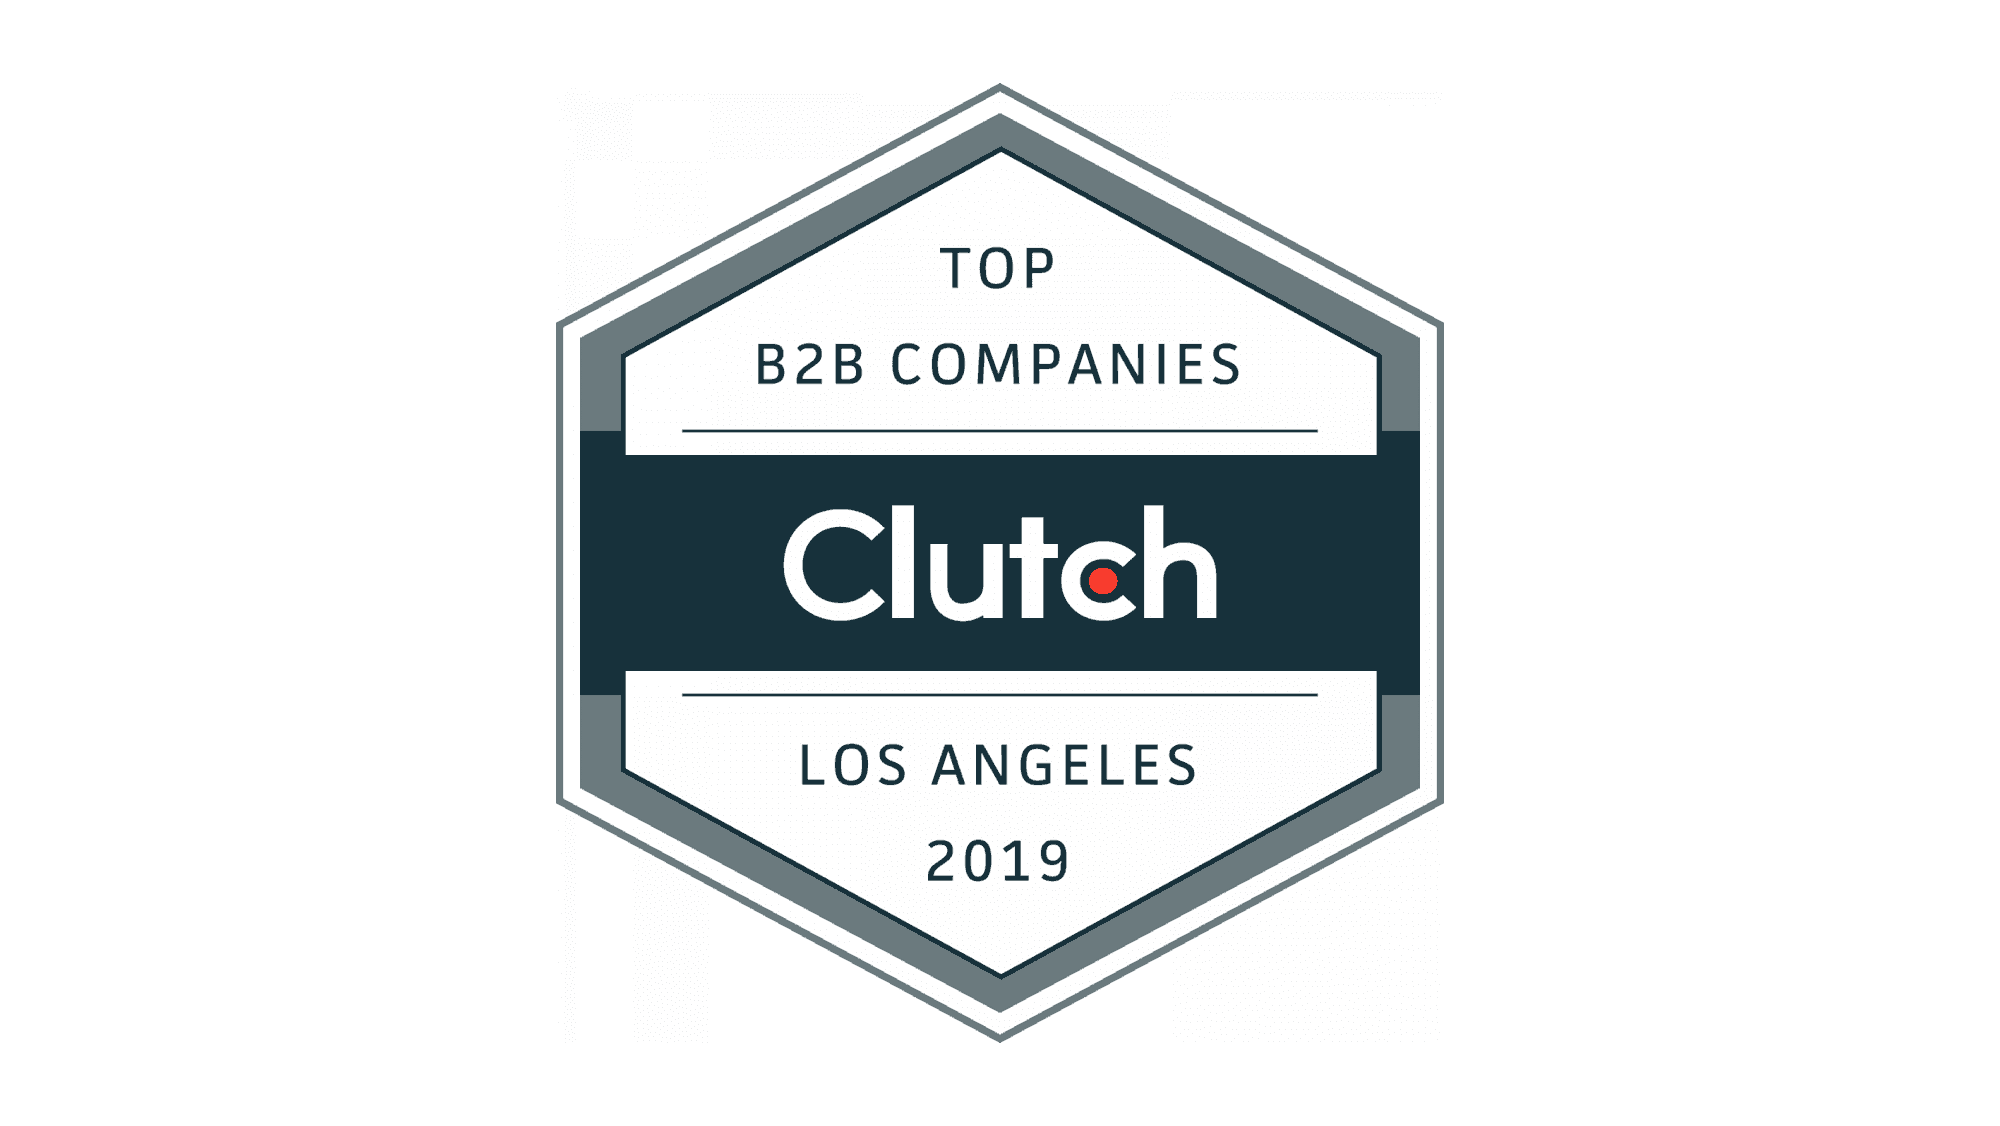 Clutch Top B2B Companies Los Angeles 2019